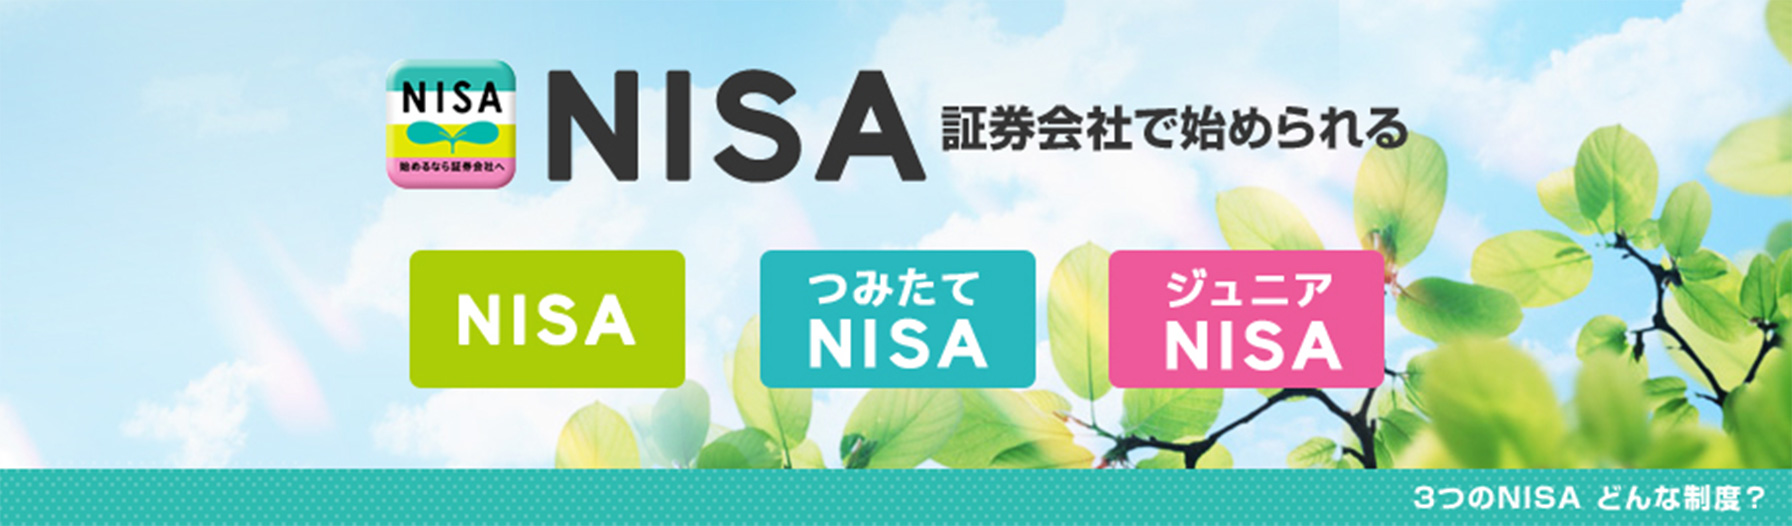 NISA　証券会社で始められる　NISA、つみたてNISA、ジュニアNISA　3つのNISA どんな制度？